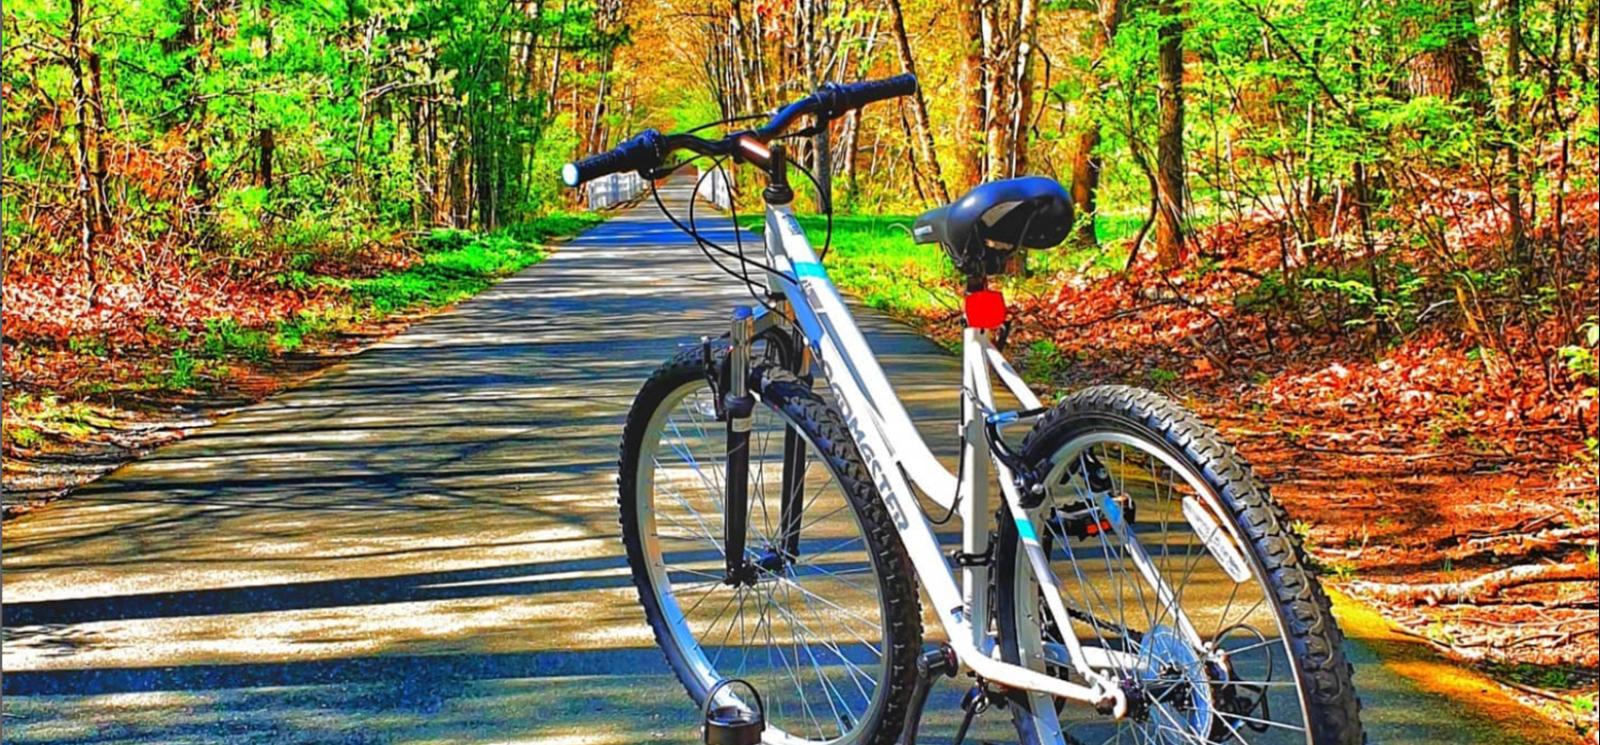 A bike parked on bike path in the woods (Instagram@linda_tedela)